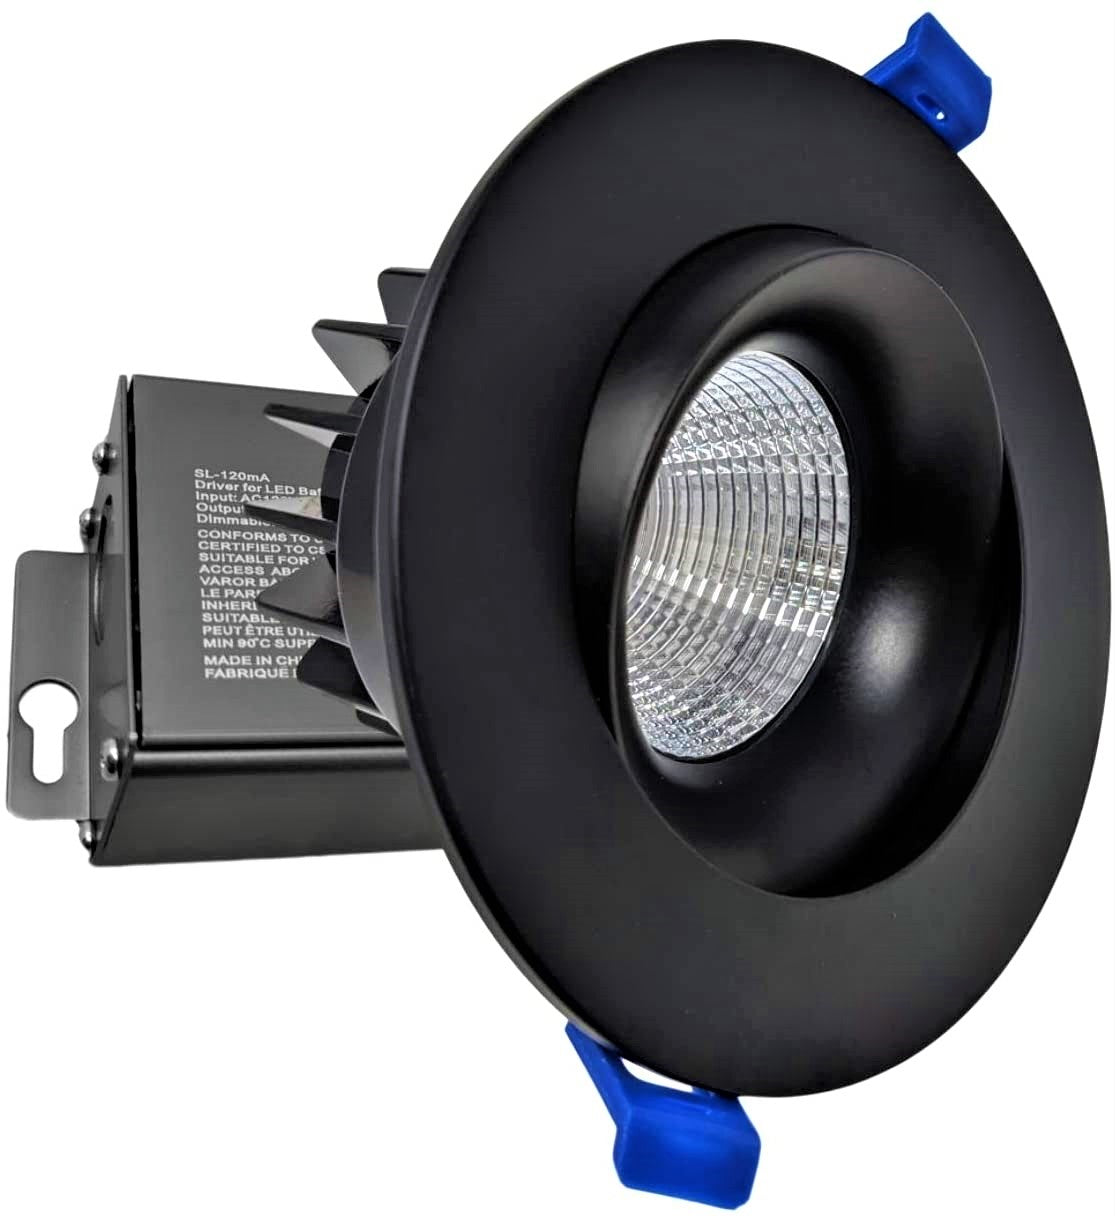 DawnRay 5CCT 4" LED Round Baffle Recessed Light (Potlight) 2700K/3000K/3500K/4000K/5000K(changeable), White/Black/Brushed Nickel, 12W, 830LM